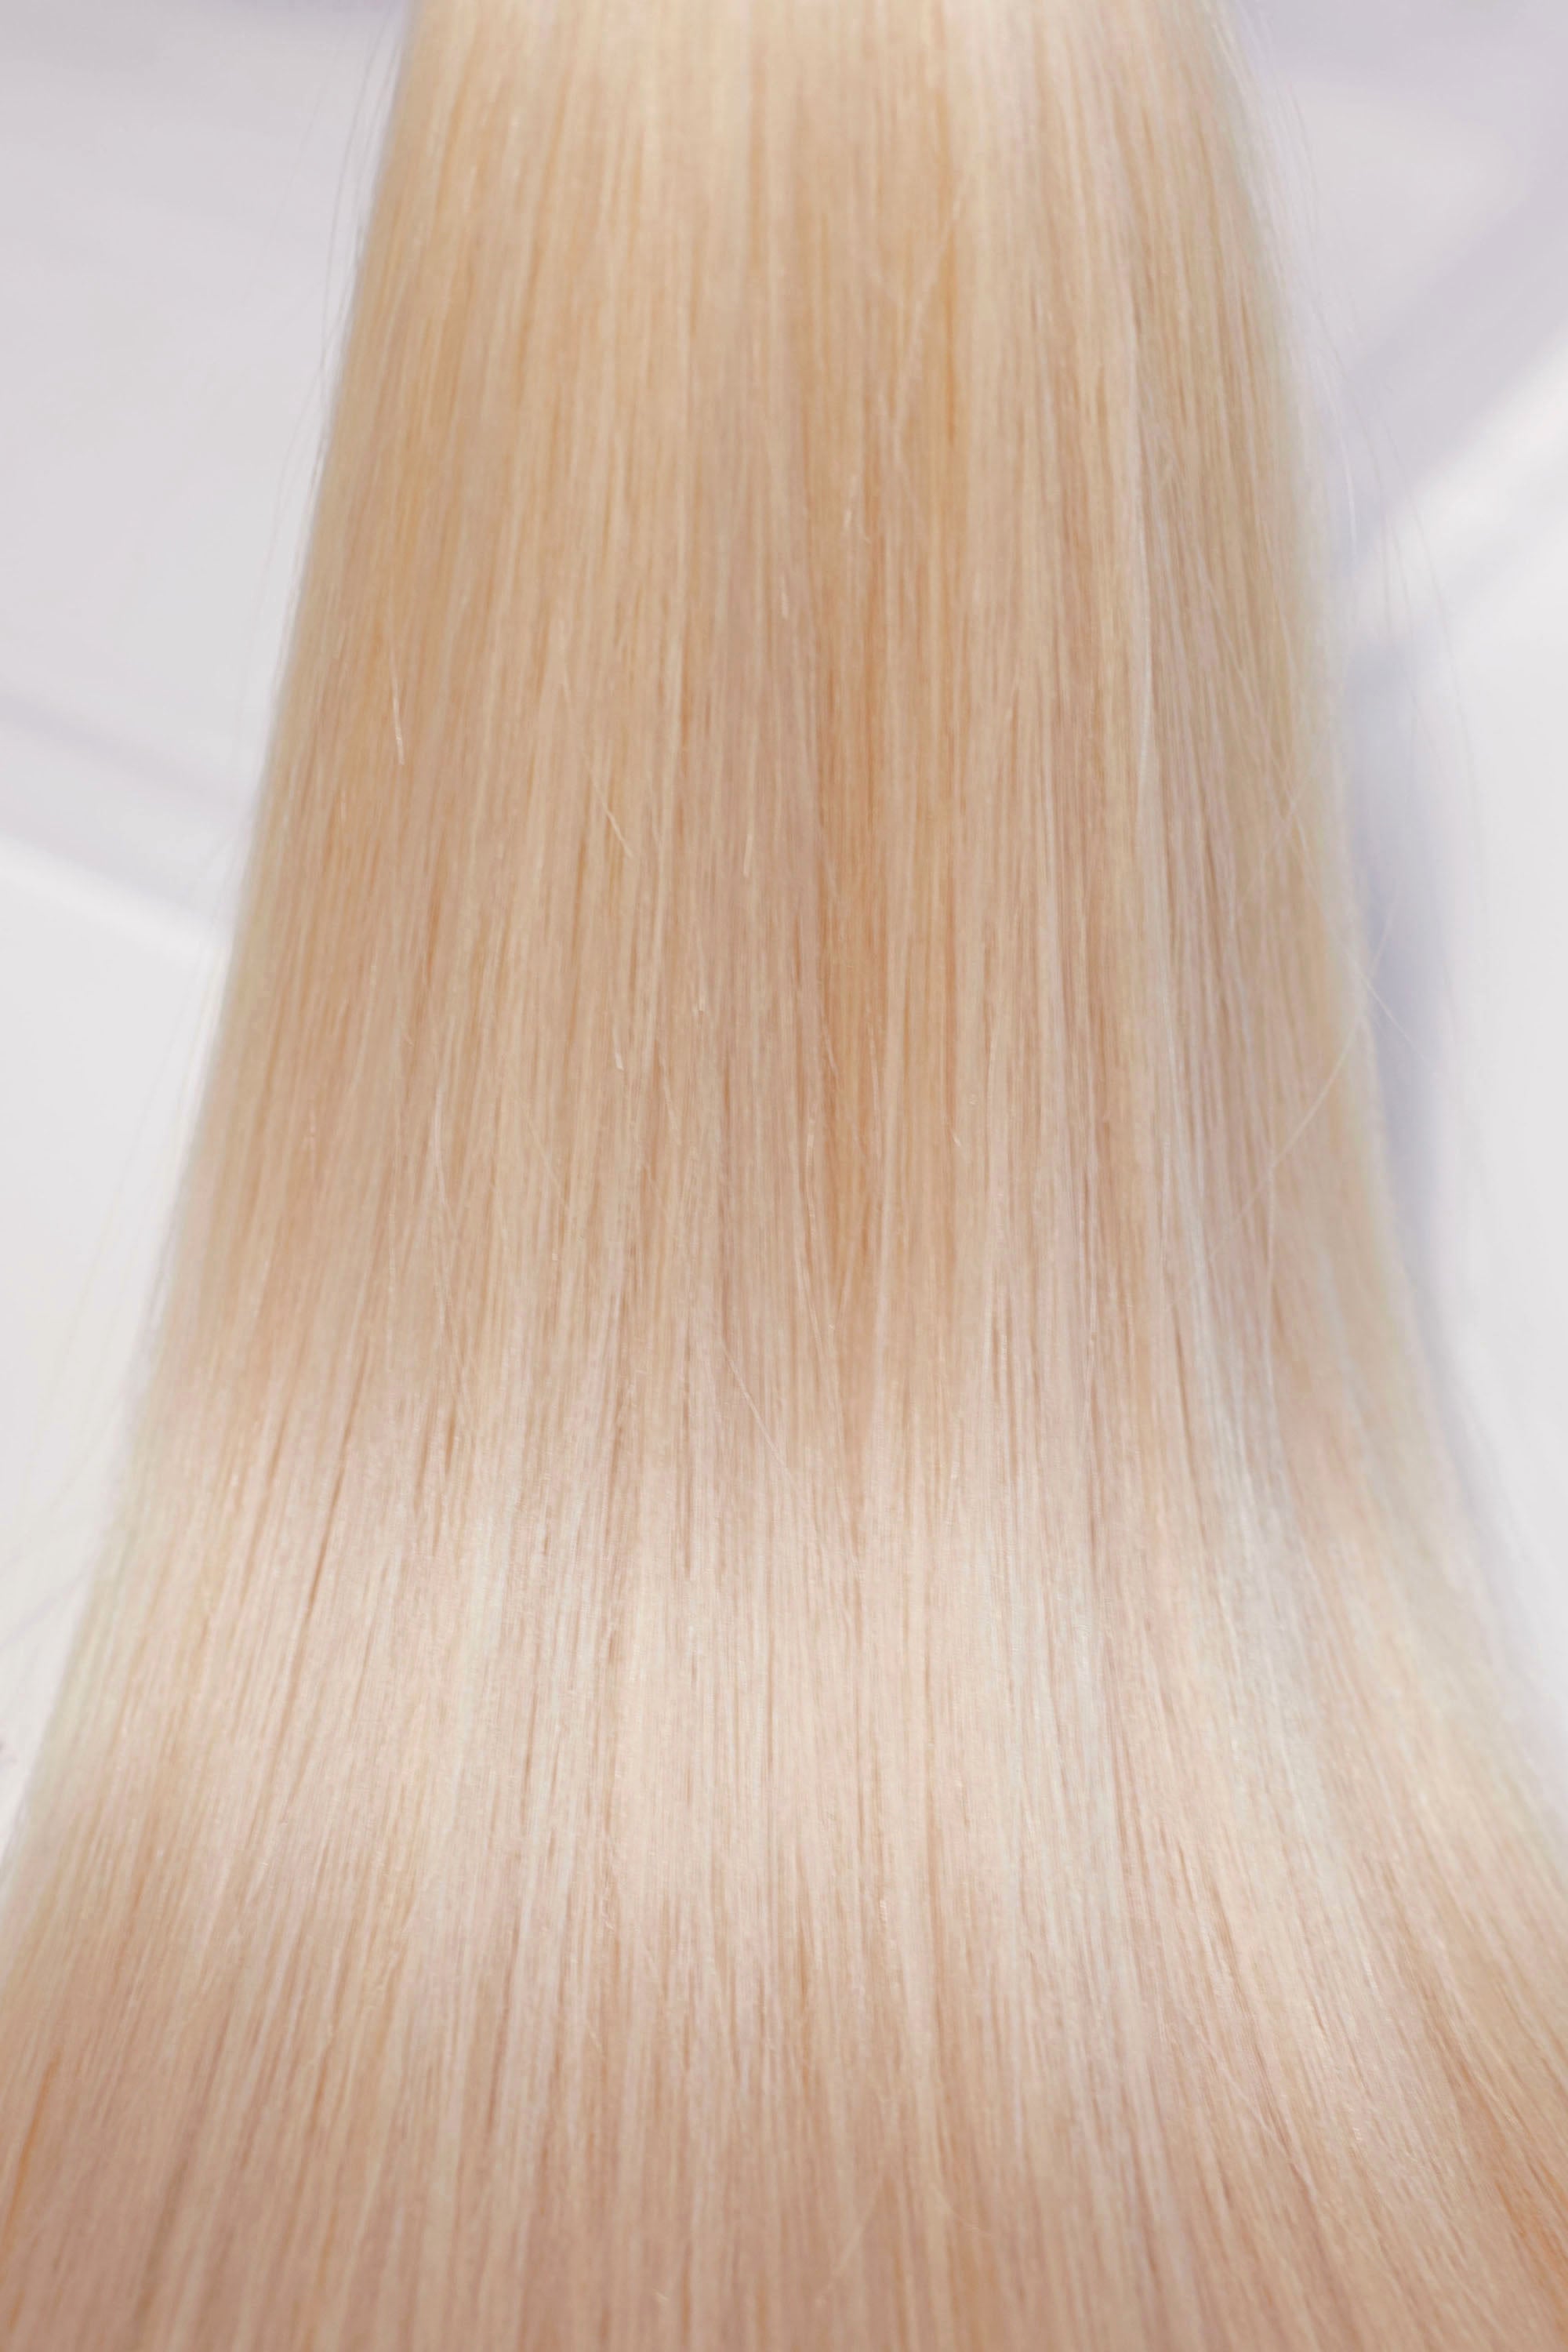 Behair professional Bulk hair "Premium" 26" (65cm) Natural Straight Platinum Blond #60 - 25g hair extensions